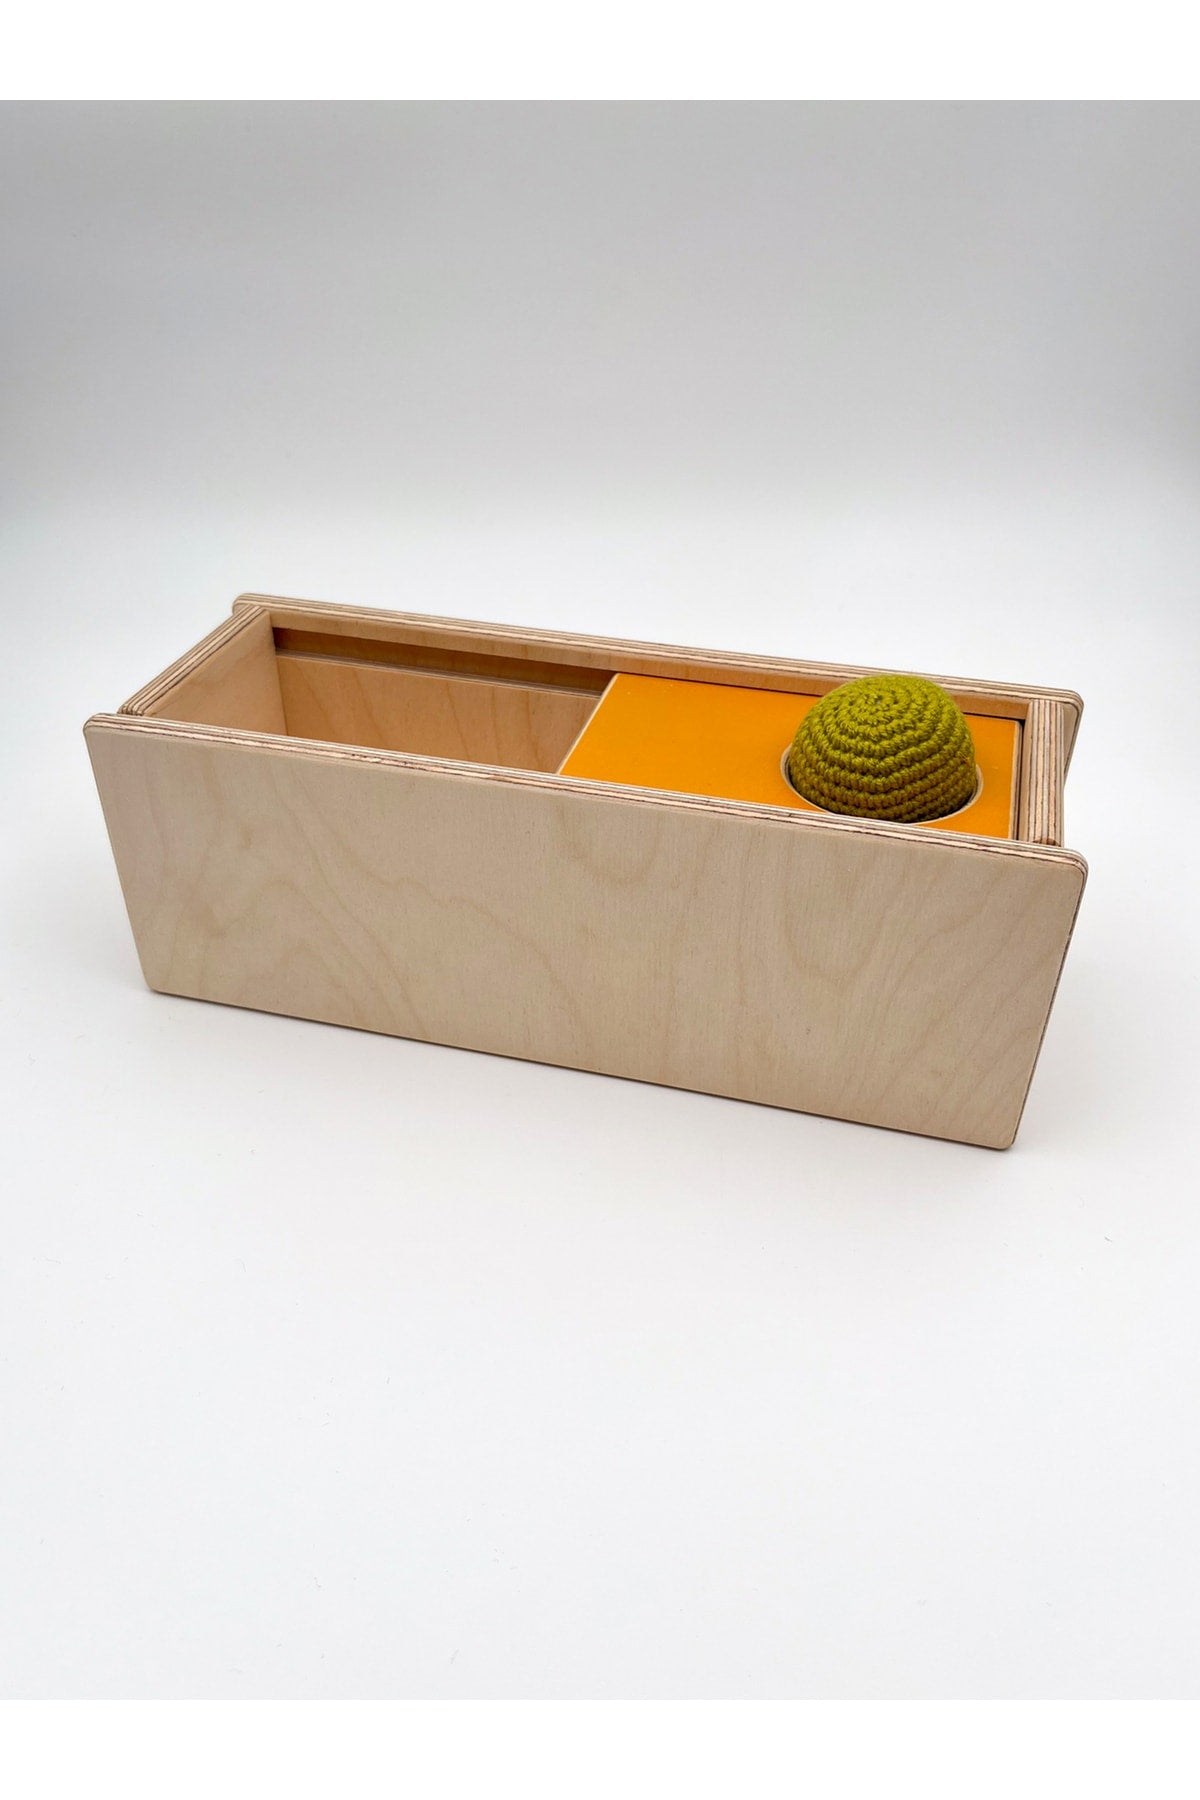 Montessori Top Sliding Box Toy , Object Persistence Box